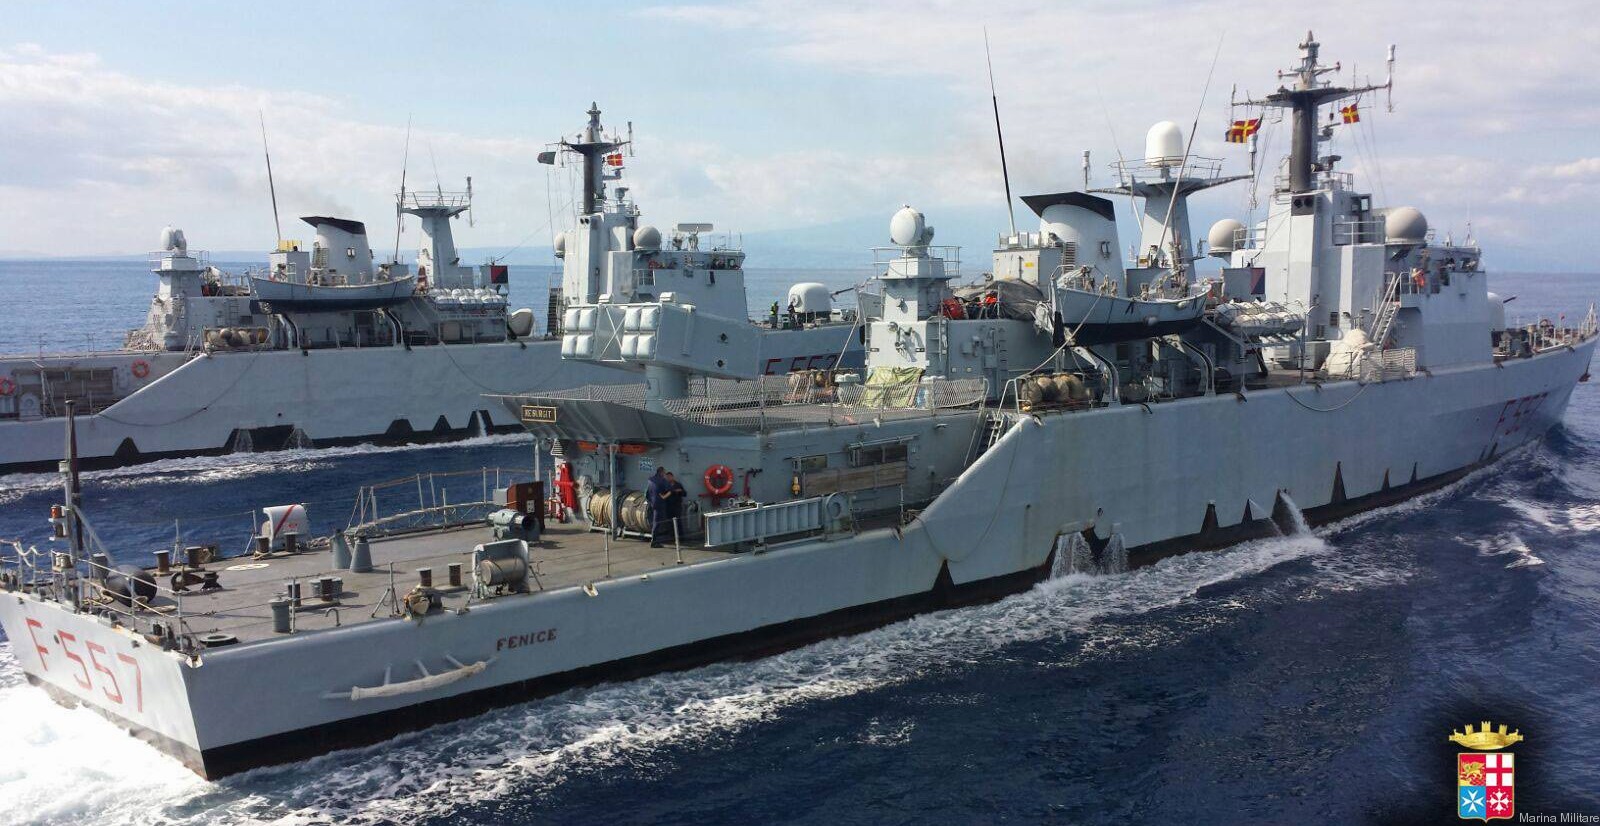 f-557 fenice nave its minerva class corvette italian navy marina militare 17x fincantieri muggiano